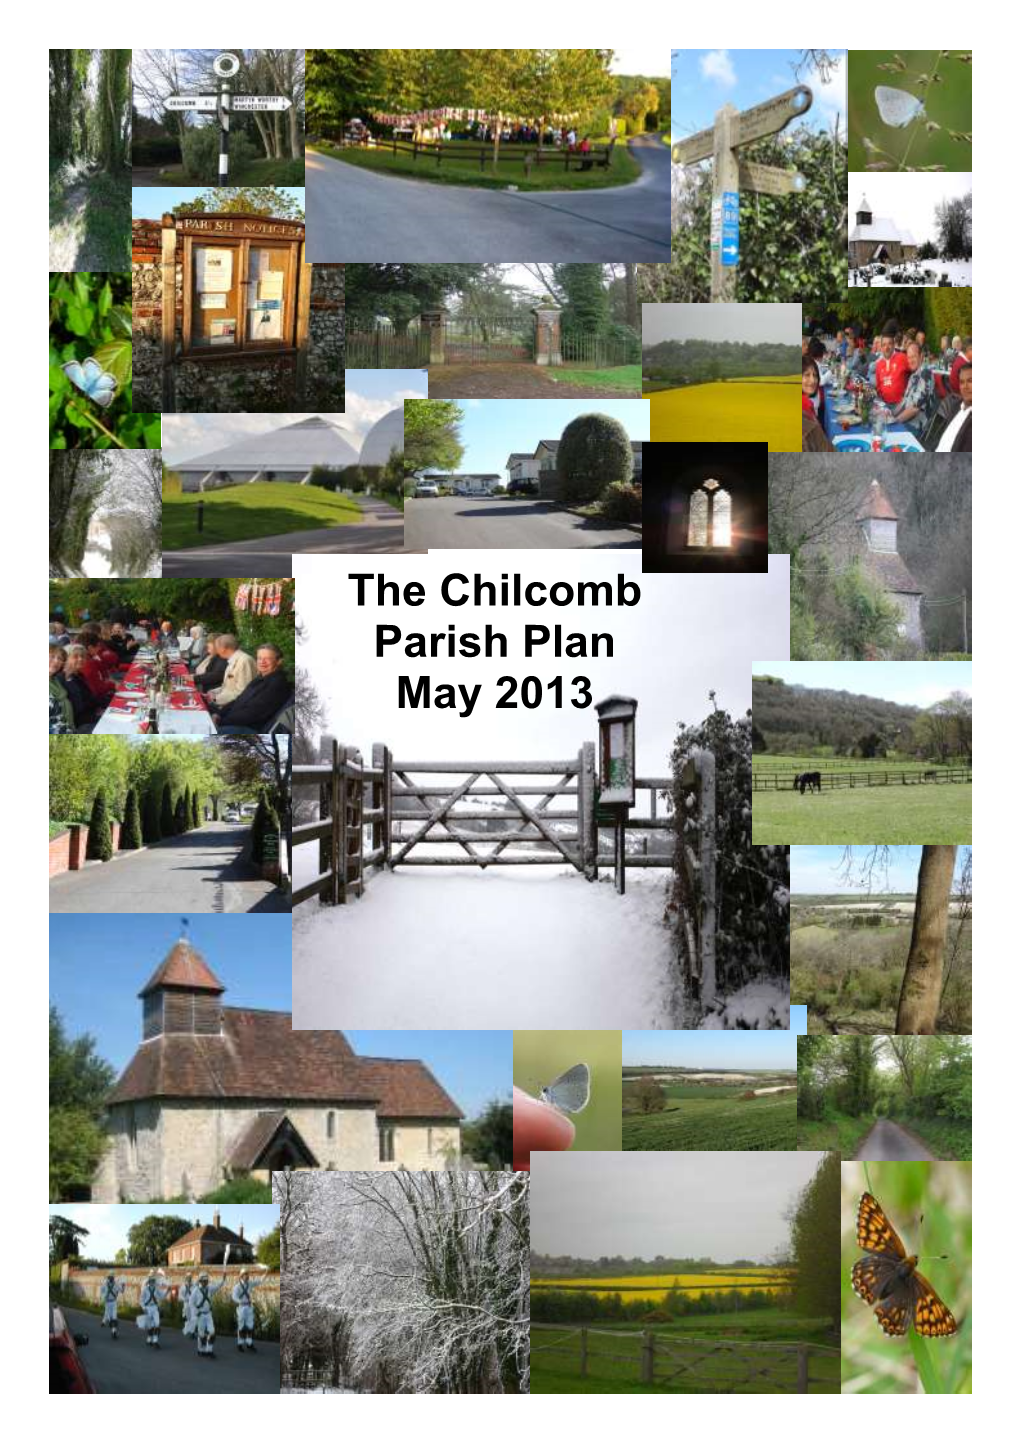 The Chilcomb Parish Plan May 2013